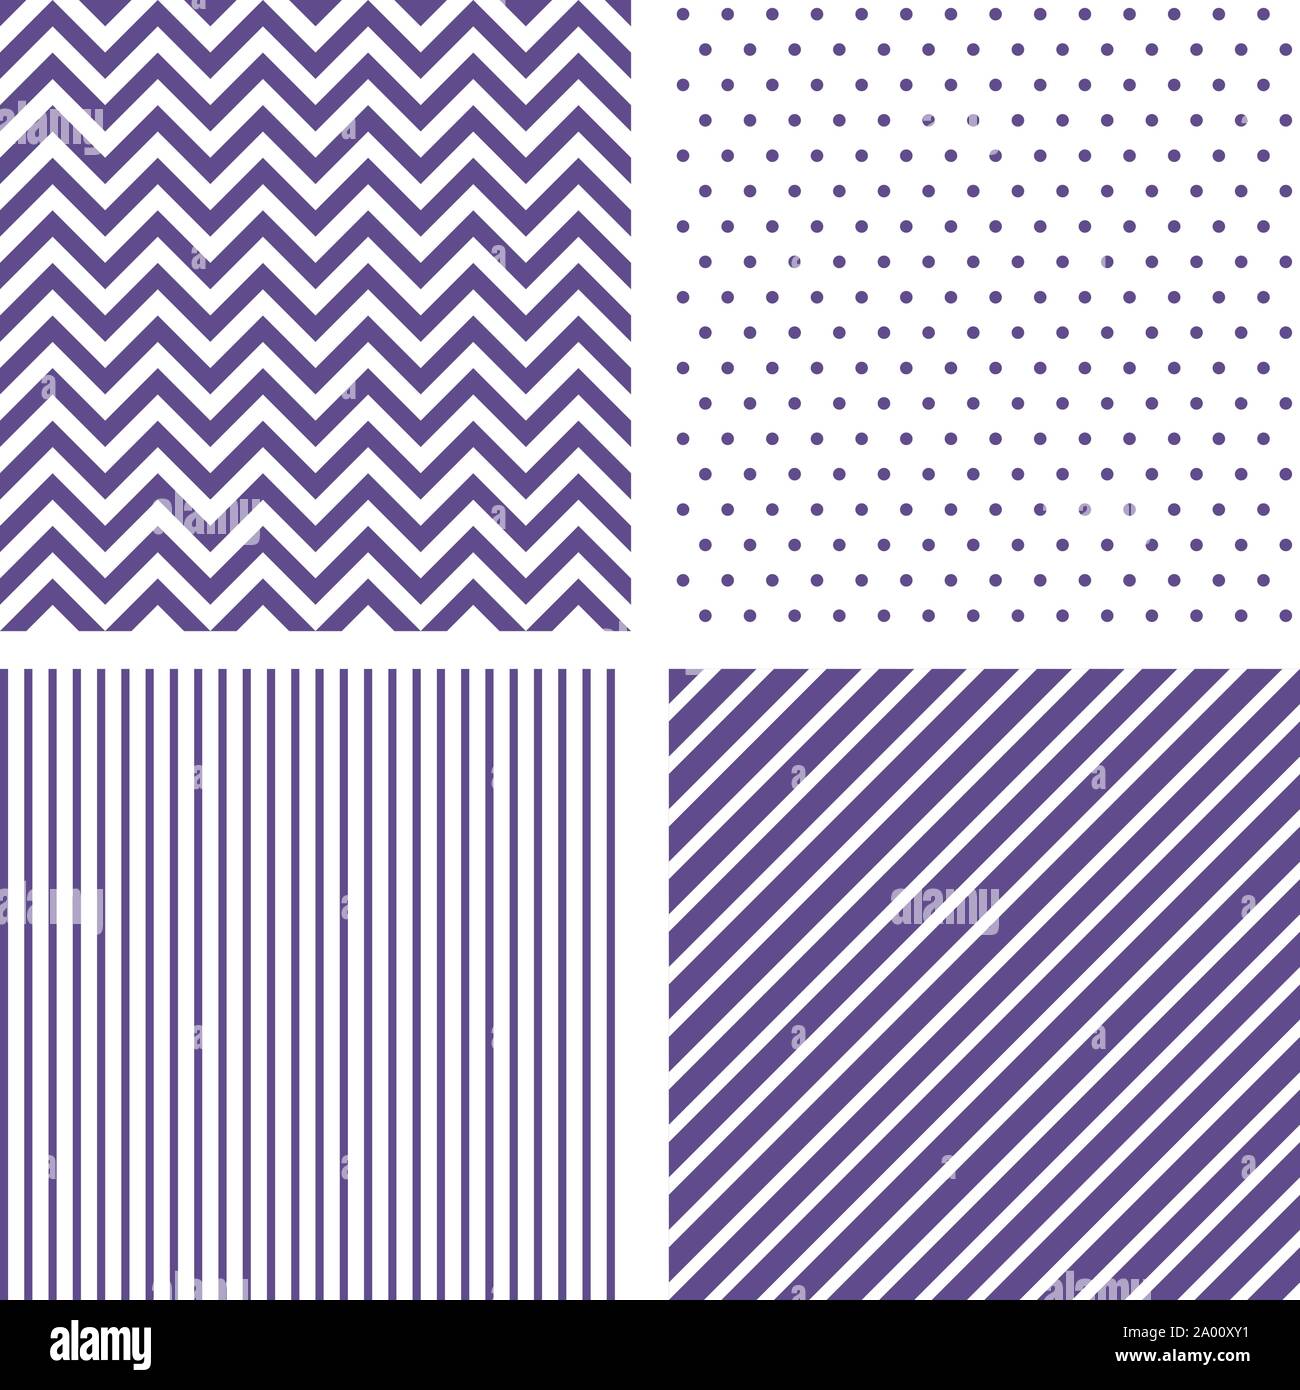 Ultra violet seamless patterns. Chevron, striped Stock Vector